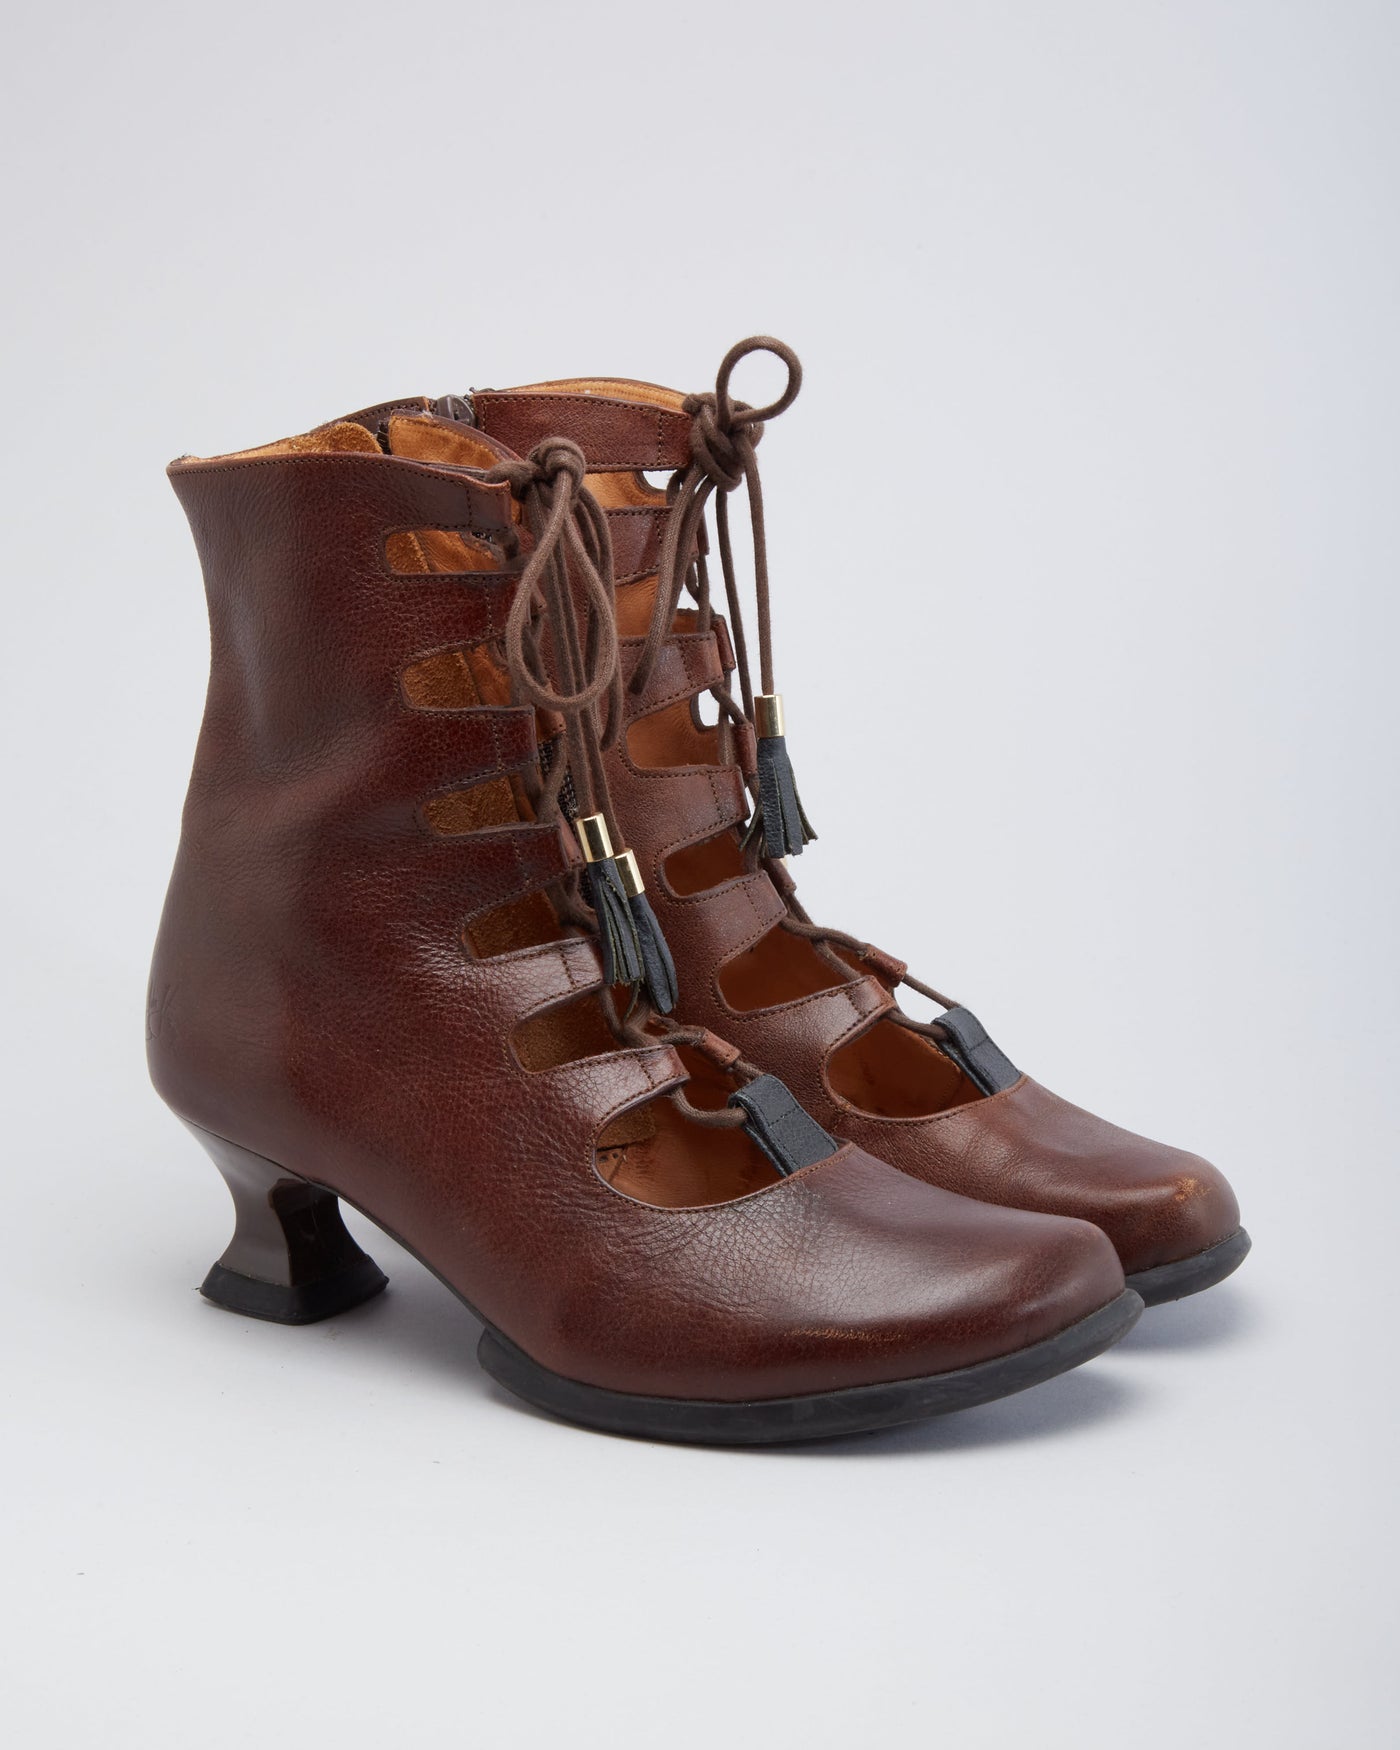 Vintage lace up Victorian Heel Boots - UK 5.5